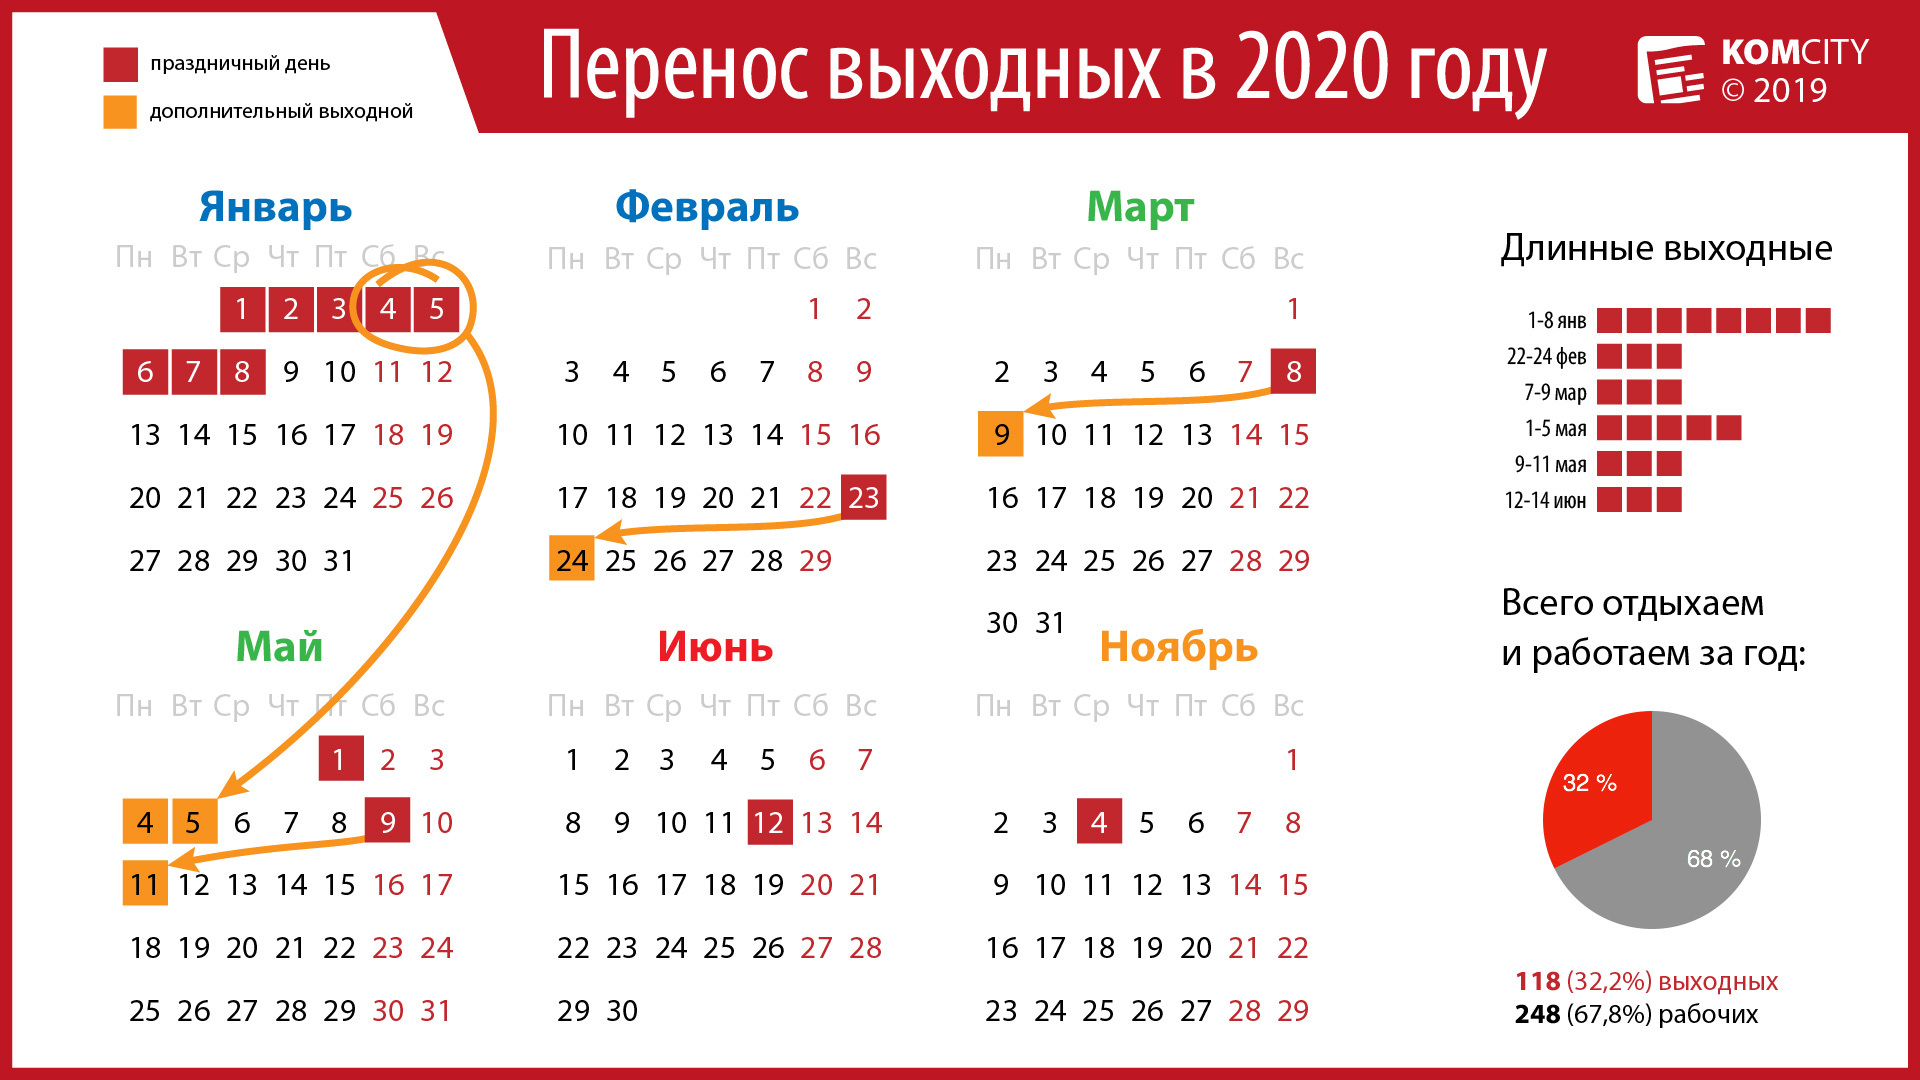 Календарь.by производственный календарь в республике беларусь в  году
календарь.by